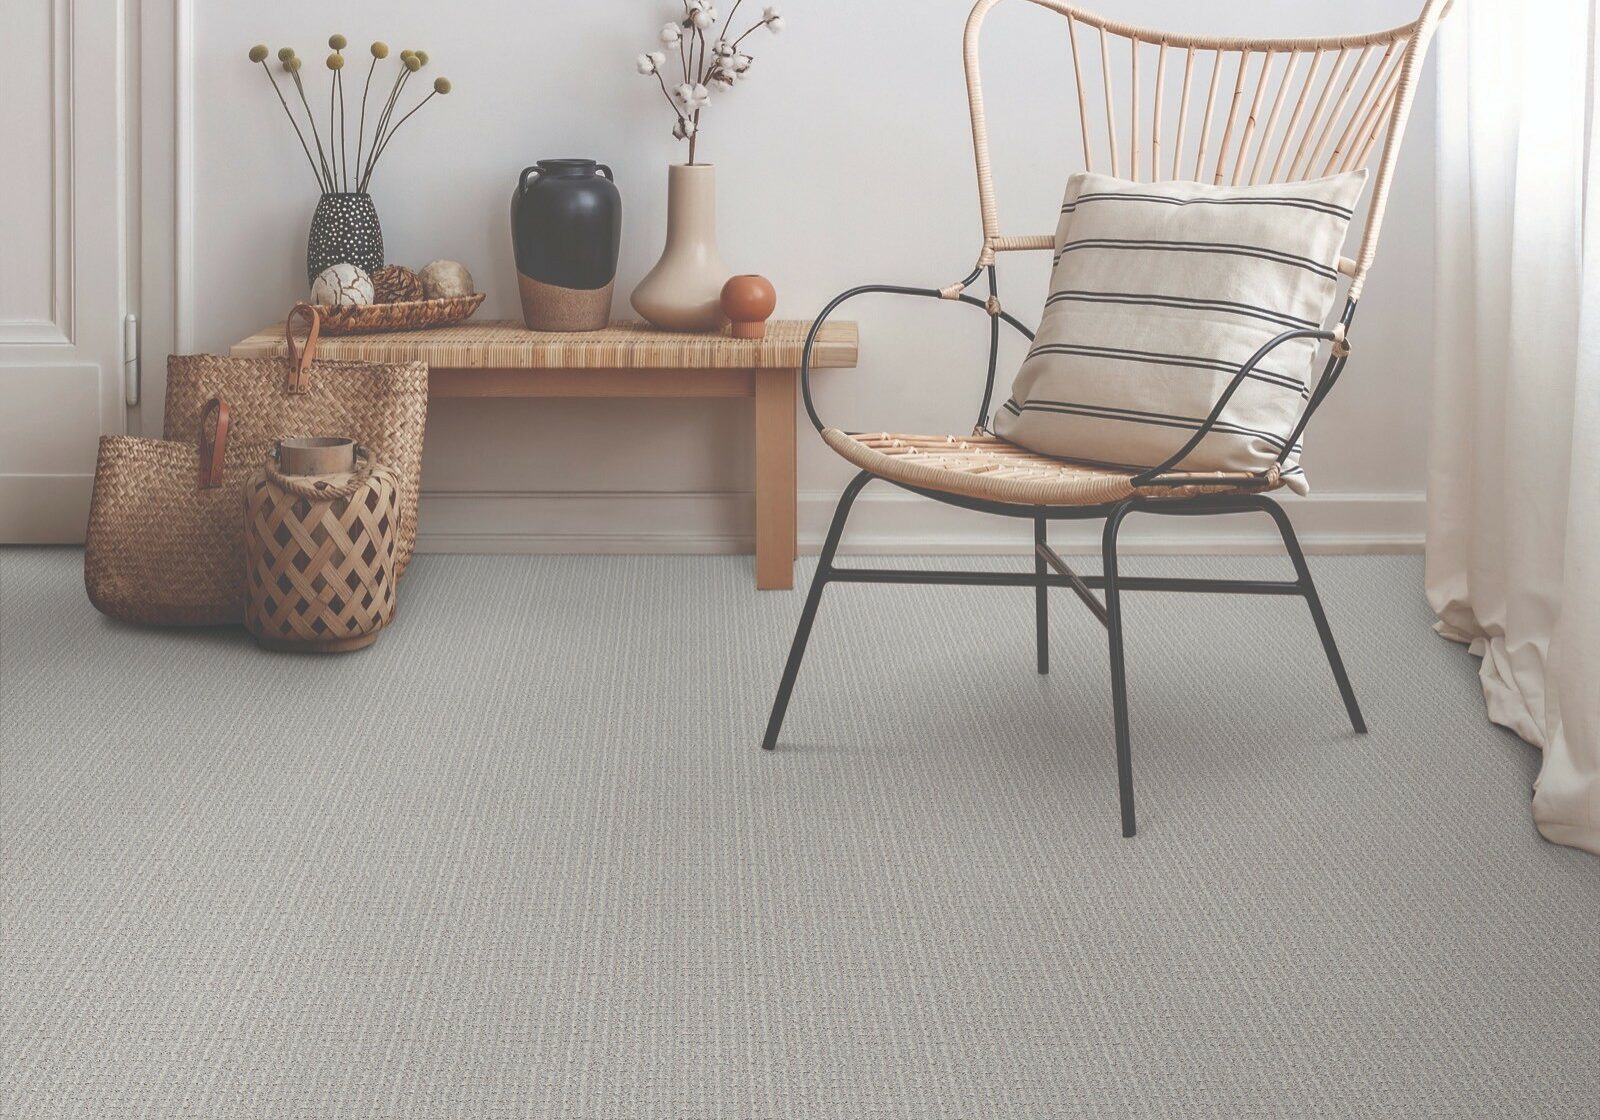 Chair on carpet floor | Demotte Carpet Inc.